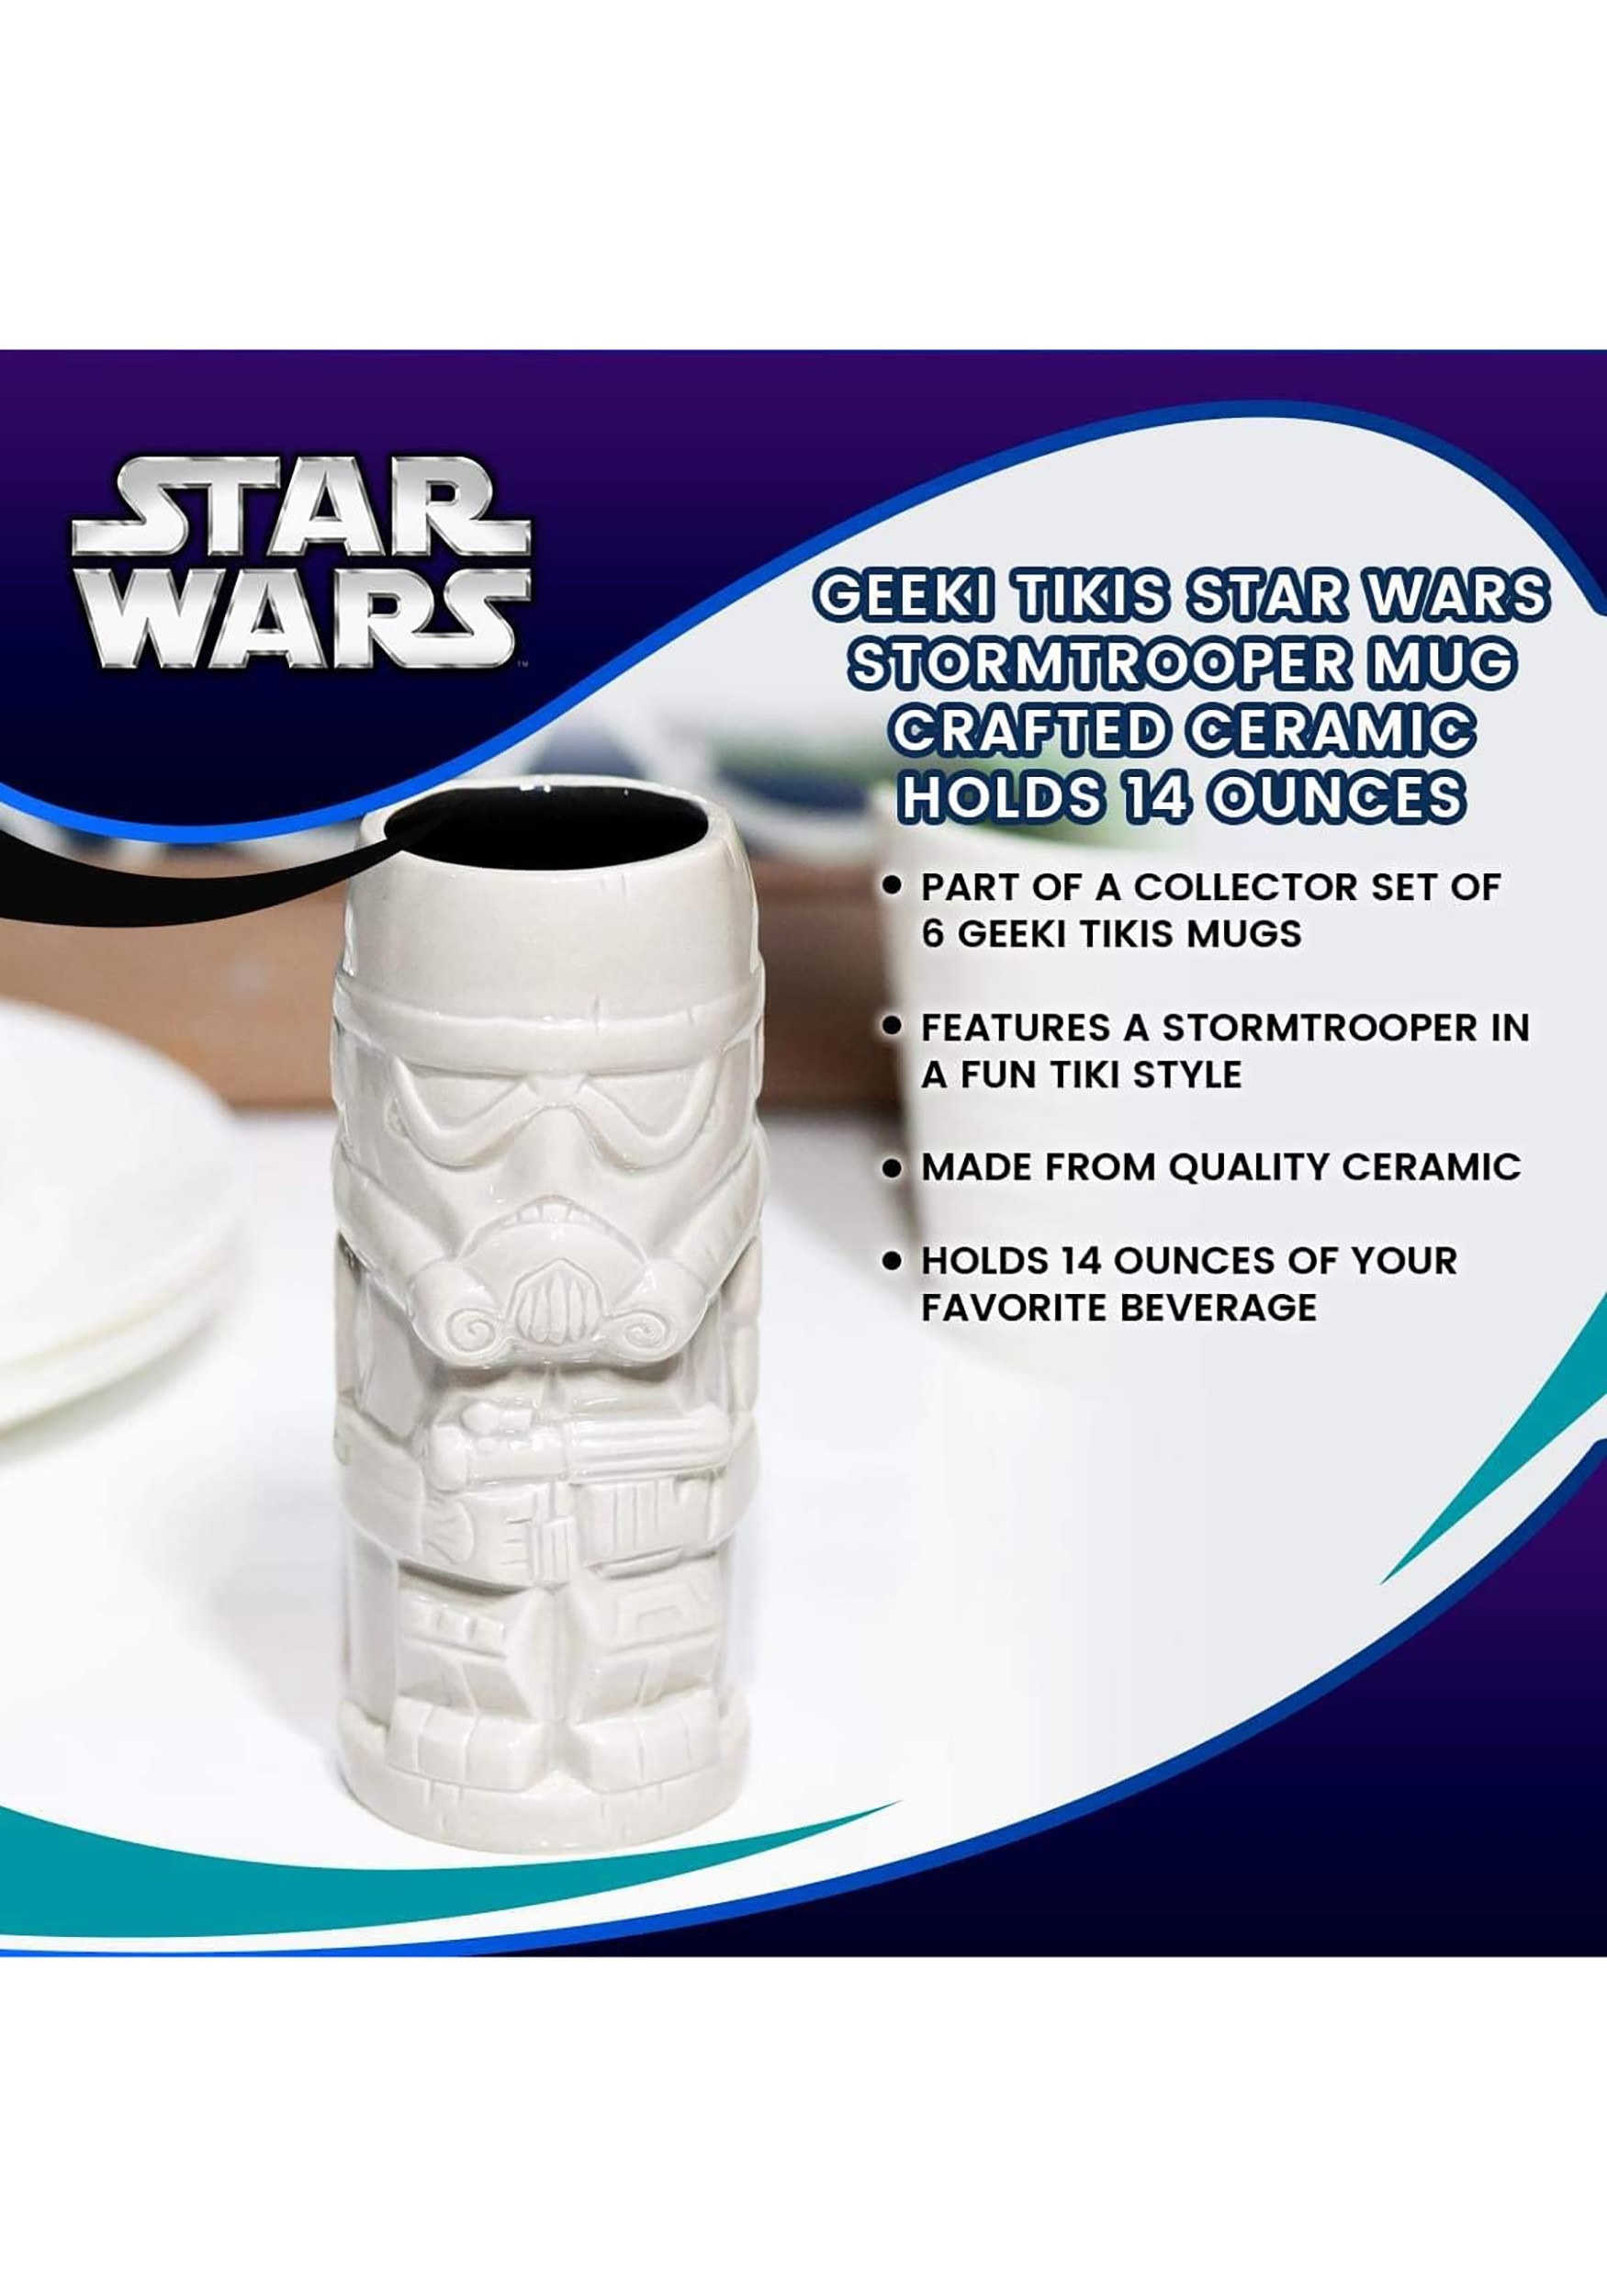 Details about   Geeki Tikis Star Wars Storm Trooper 15 oz Ceramic Tiki Mug NEW IN BOX 